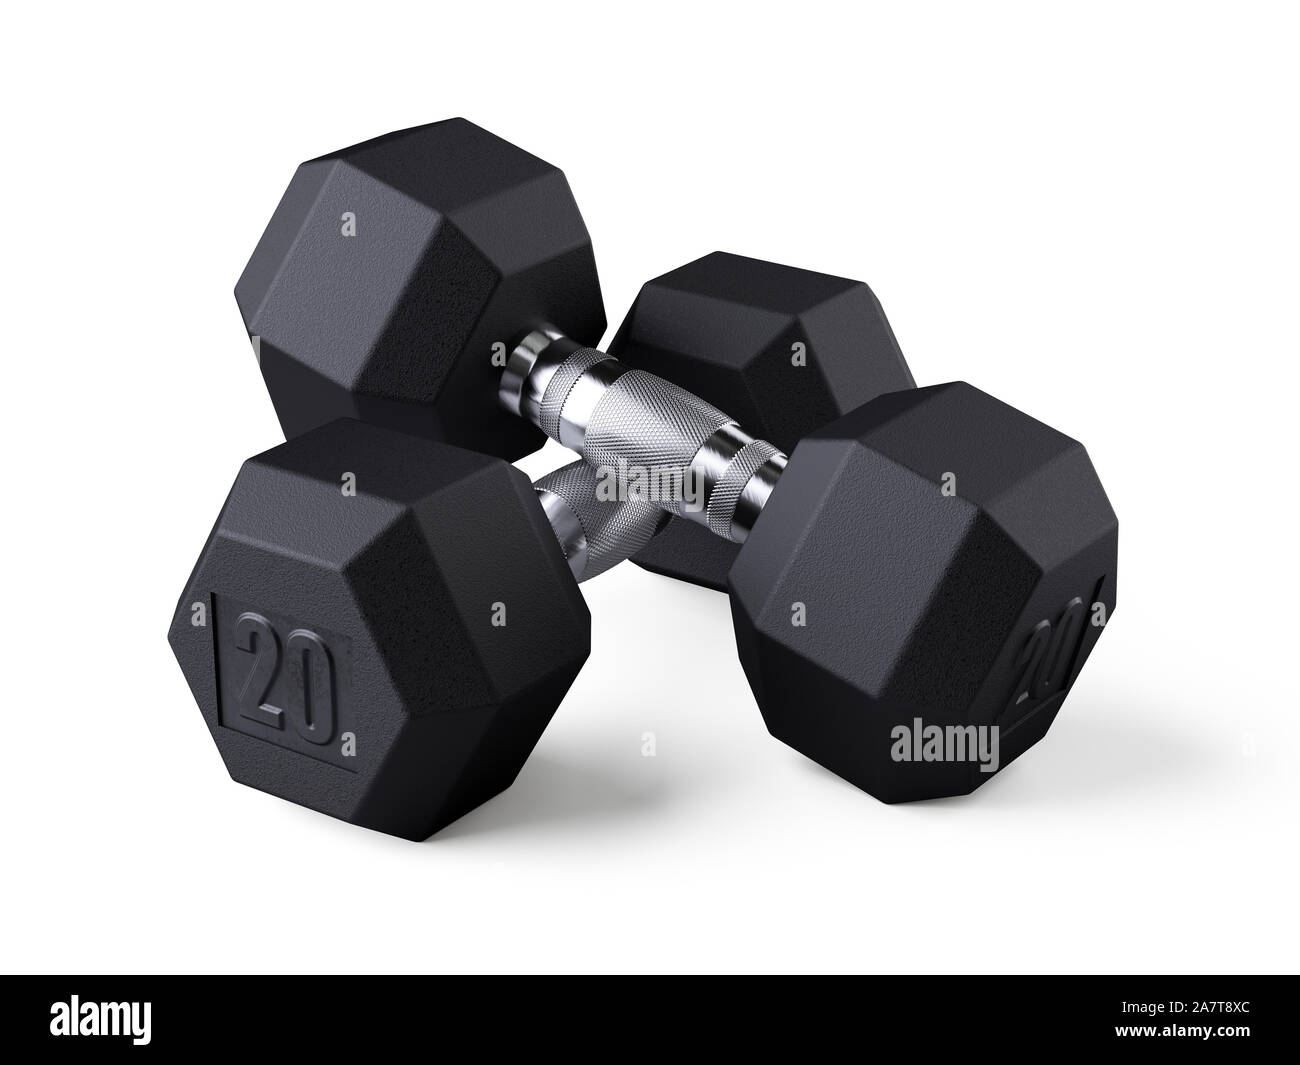 Dumbbell weight training equipment. 3d rendering illustration Stock Photo